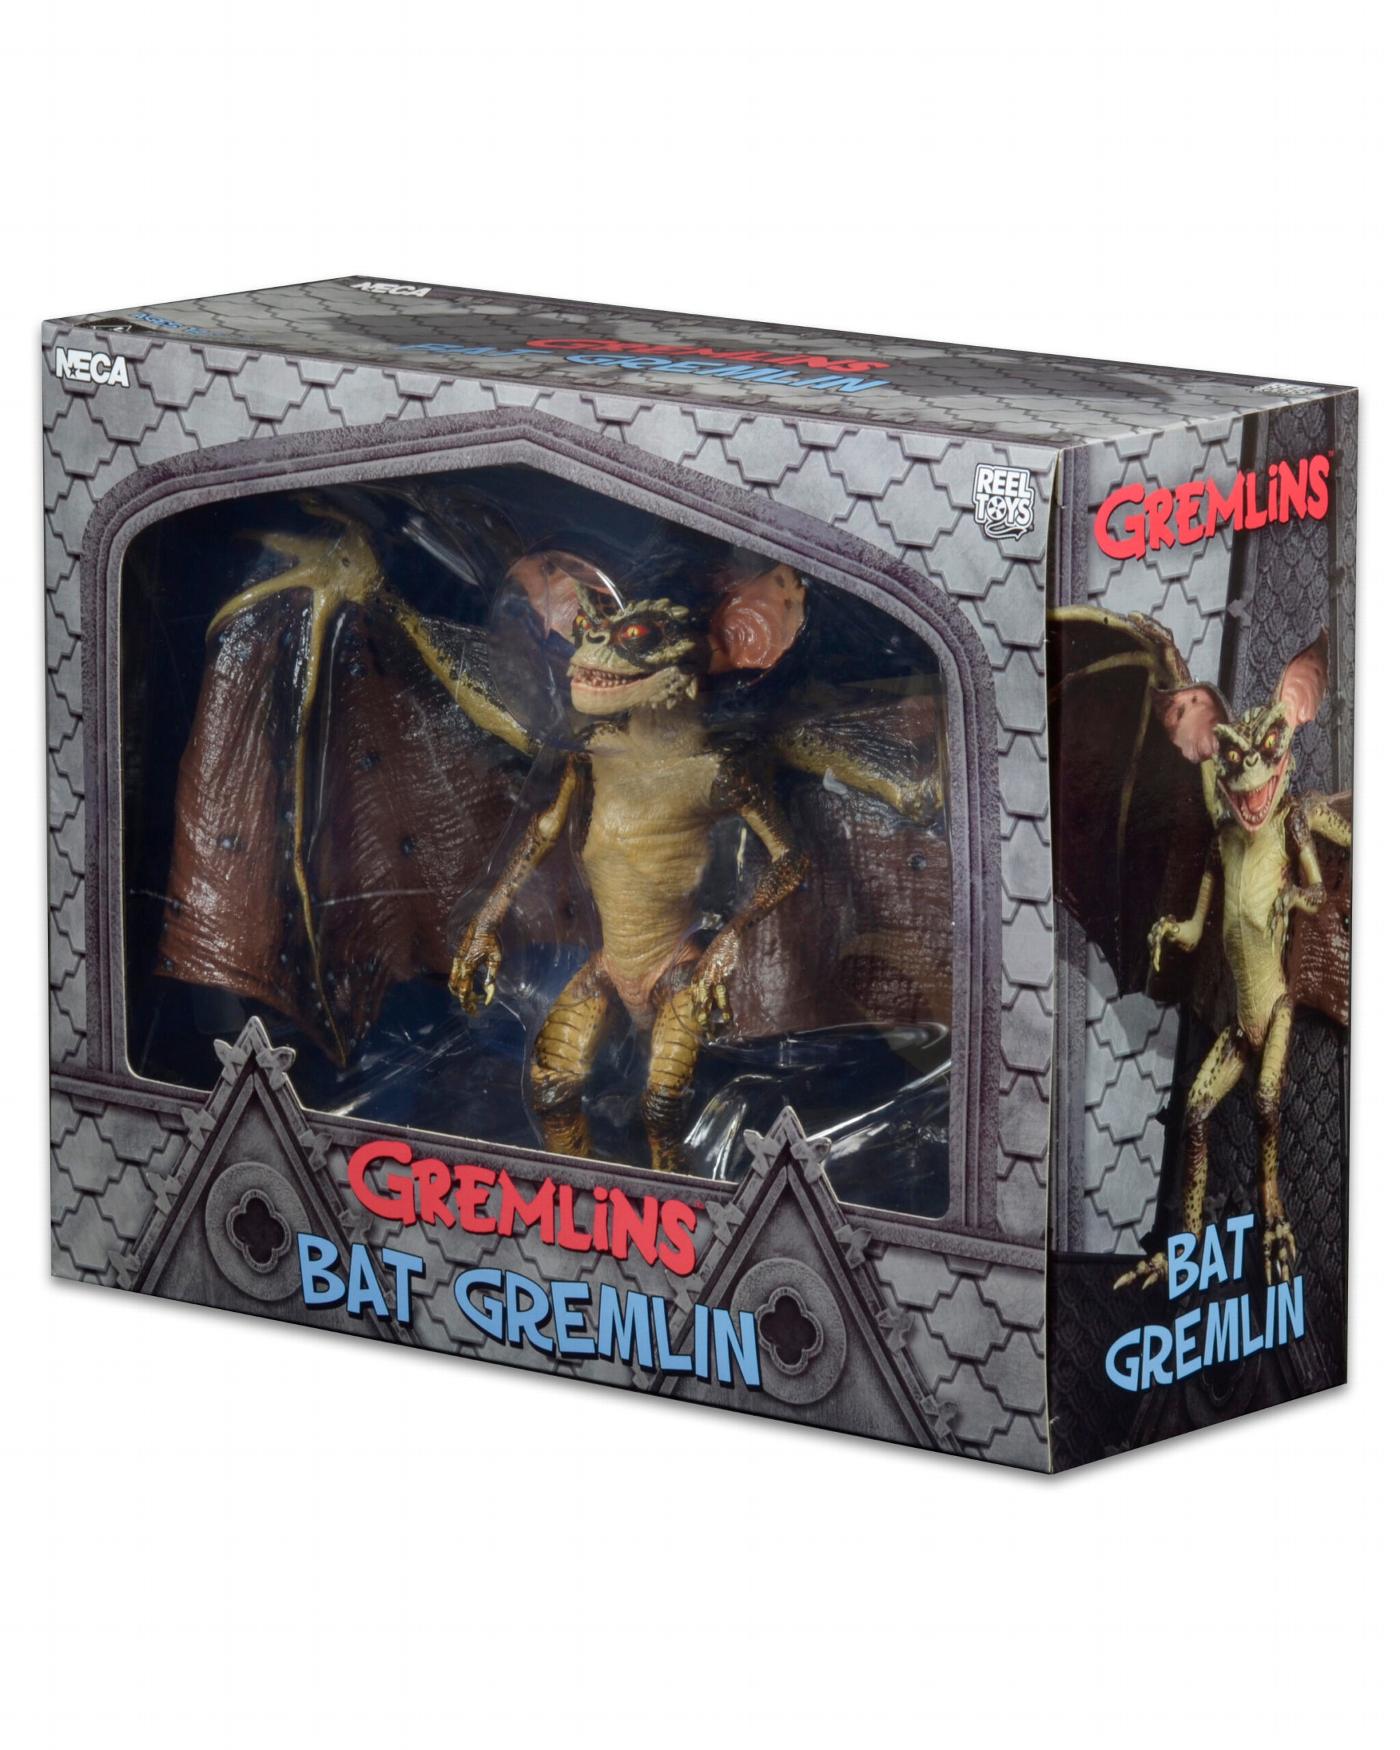 Gremlins 2 Bat Gremlin Deluxe 7 inch.